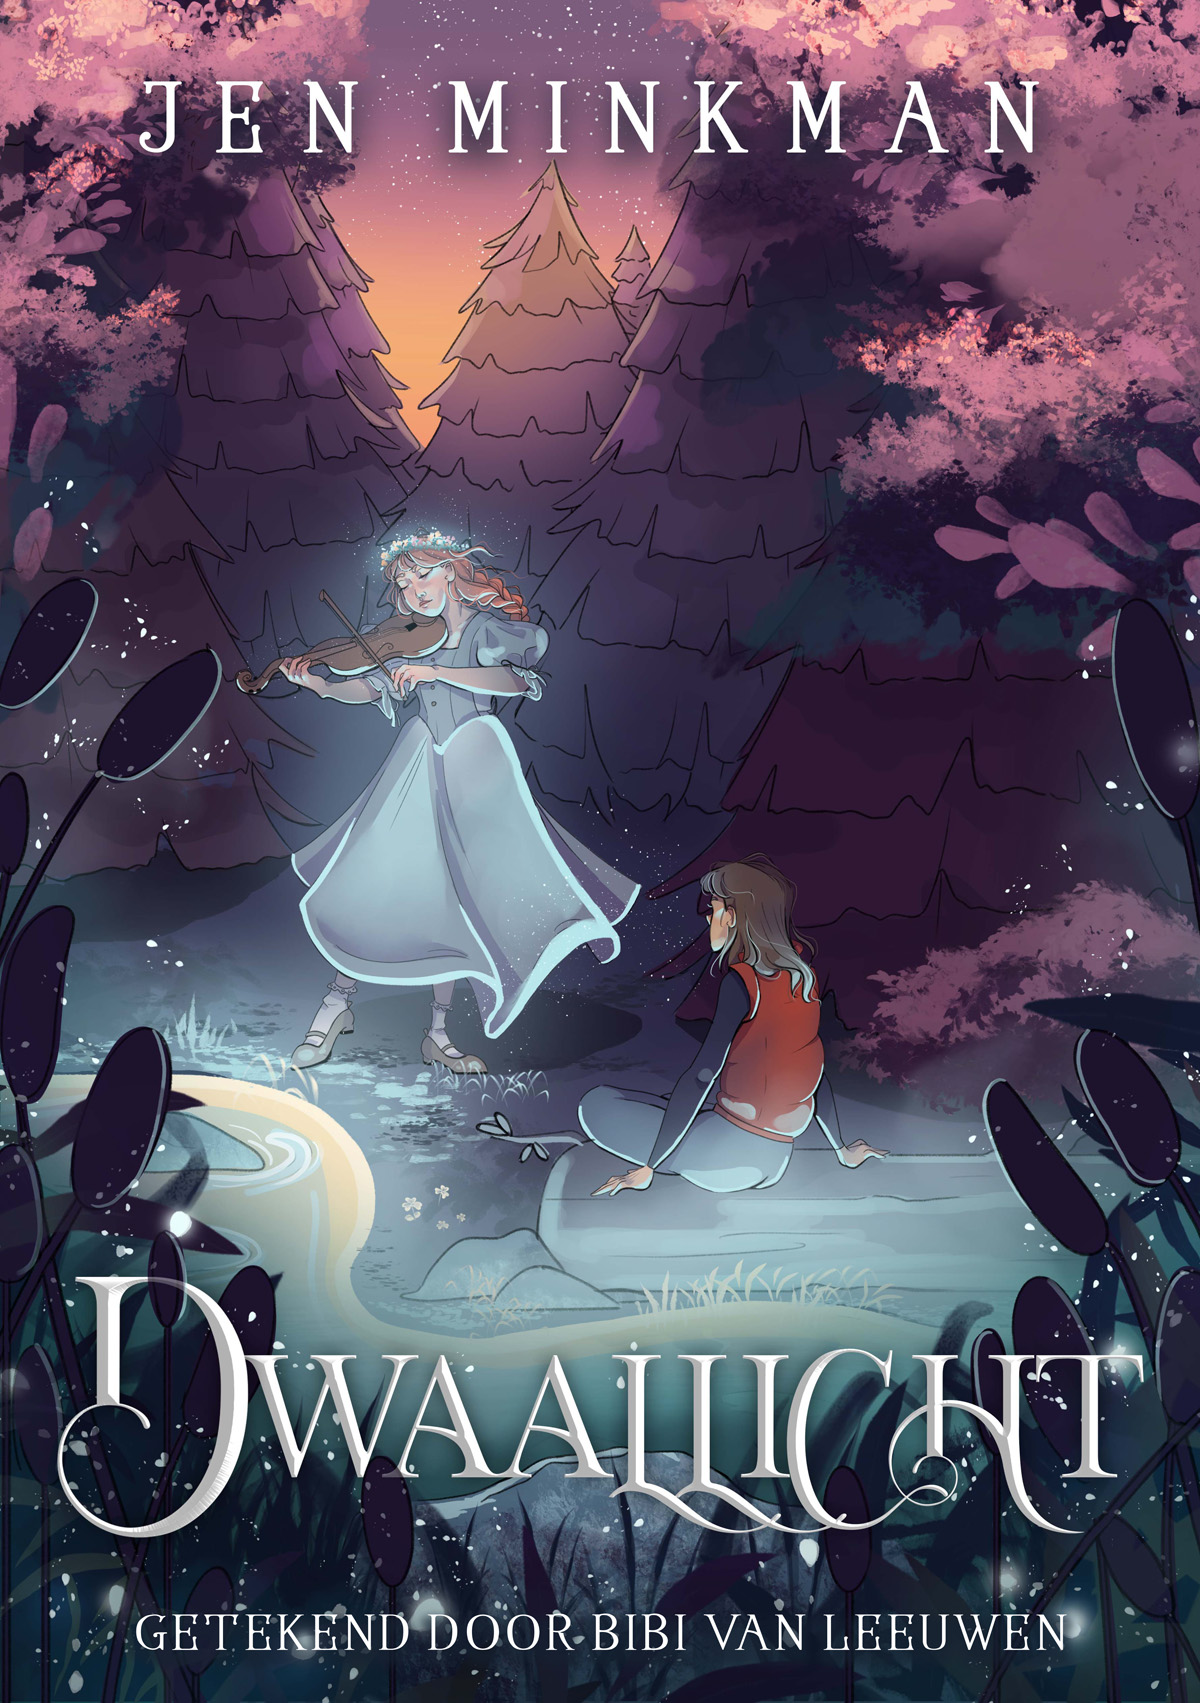 Cover illustration design for LGBTQ+ magical romance YA graphic novel 'Dwaallicht' by Jen Minkman & Bibi van Leeuwen.